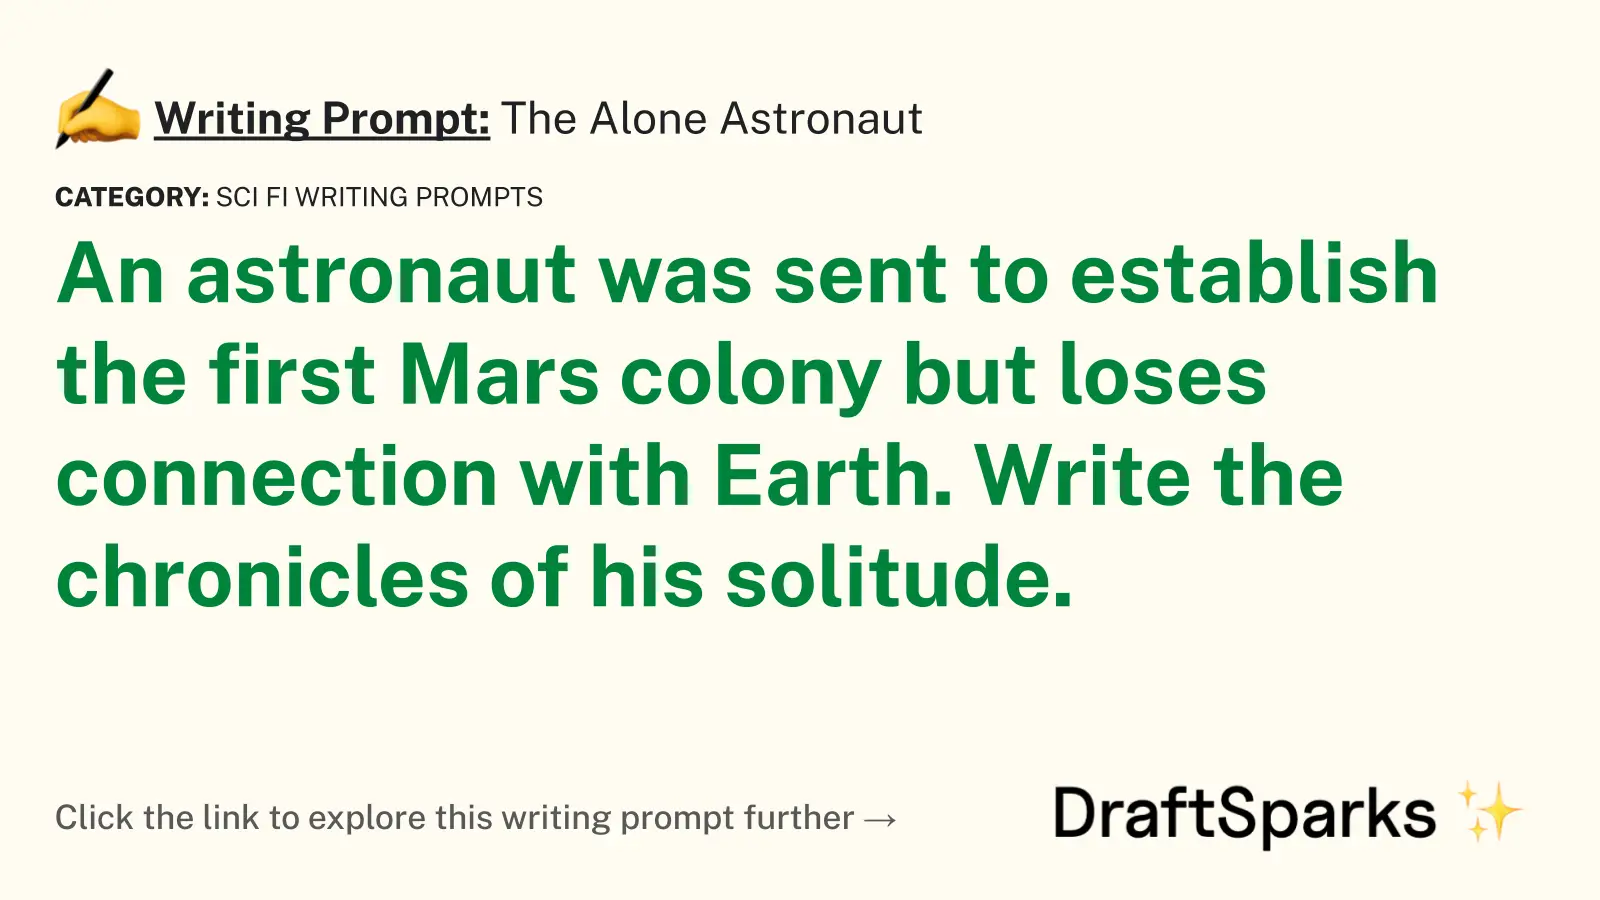 The Alone Astronaut